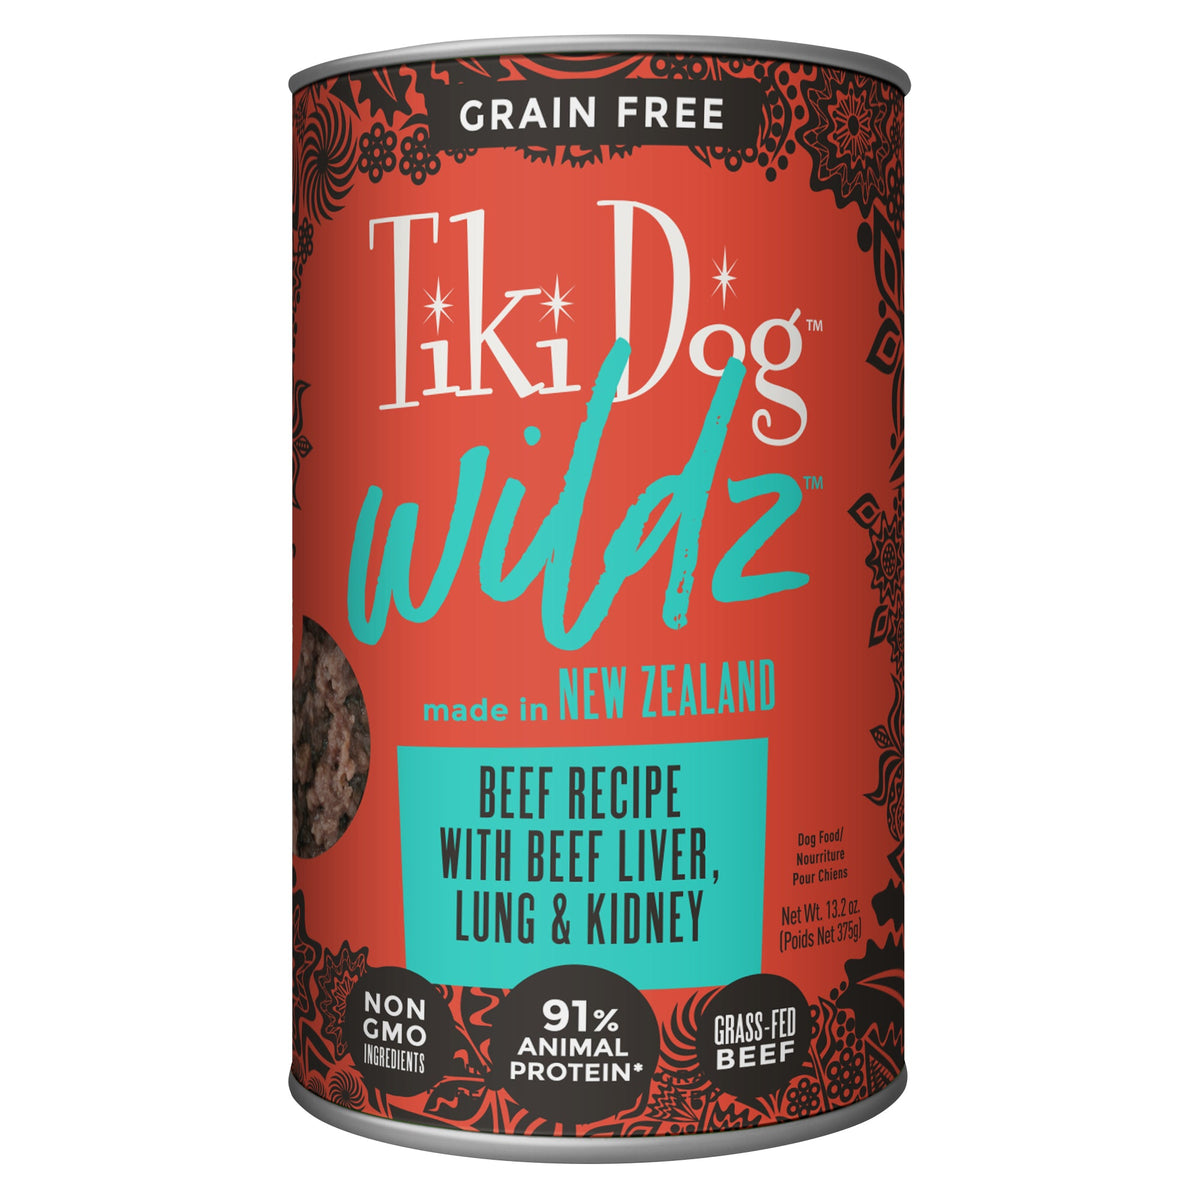 Tiki Dog Wildz Collection Dog Cans-Four Muddy Paws